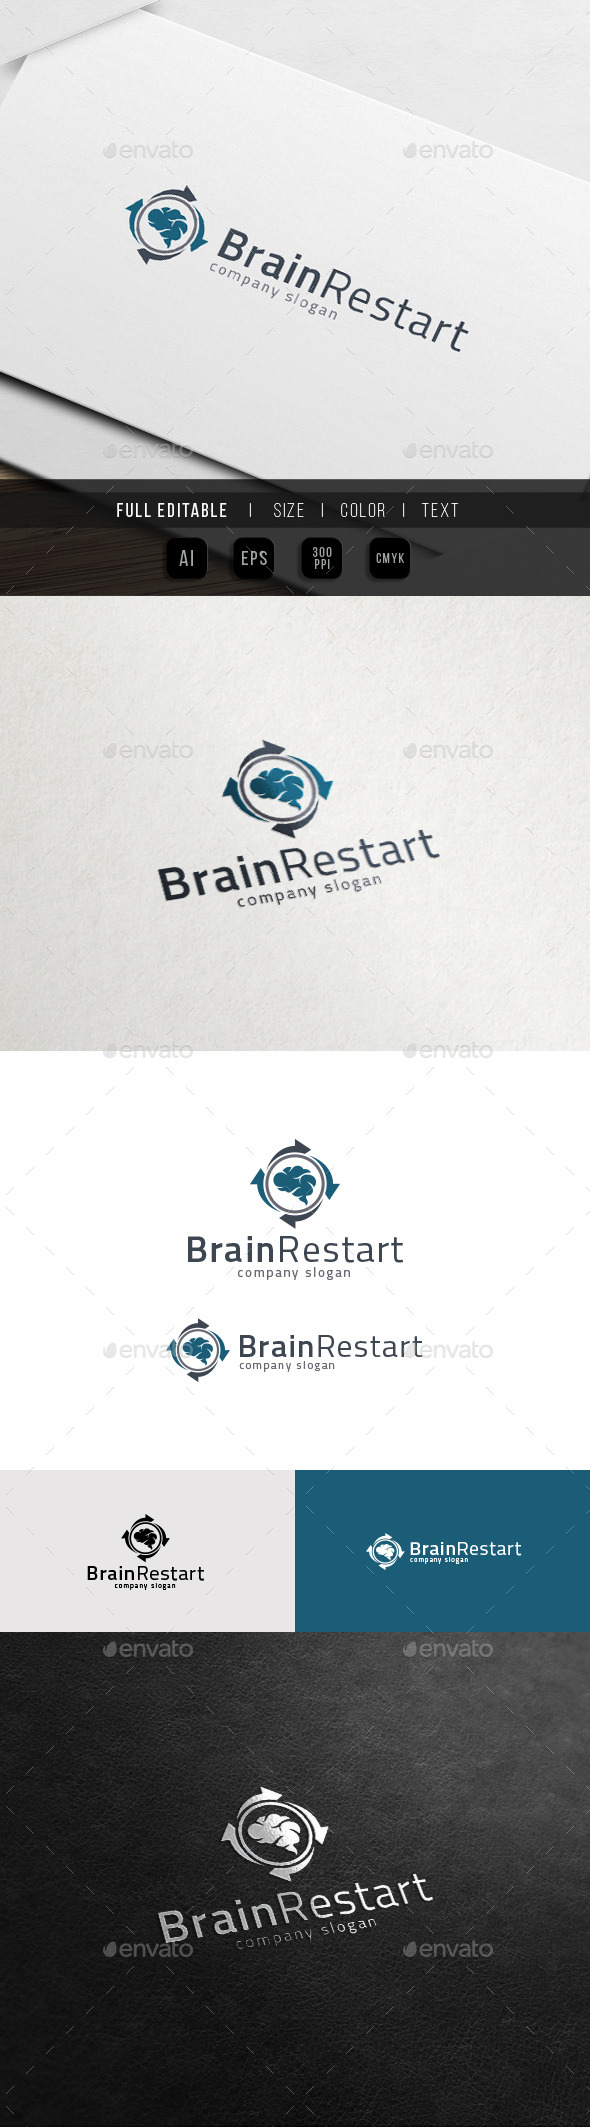 Brain Restart - Concept Load - Idea Share Logo